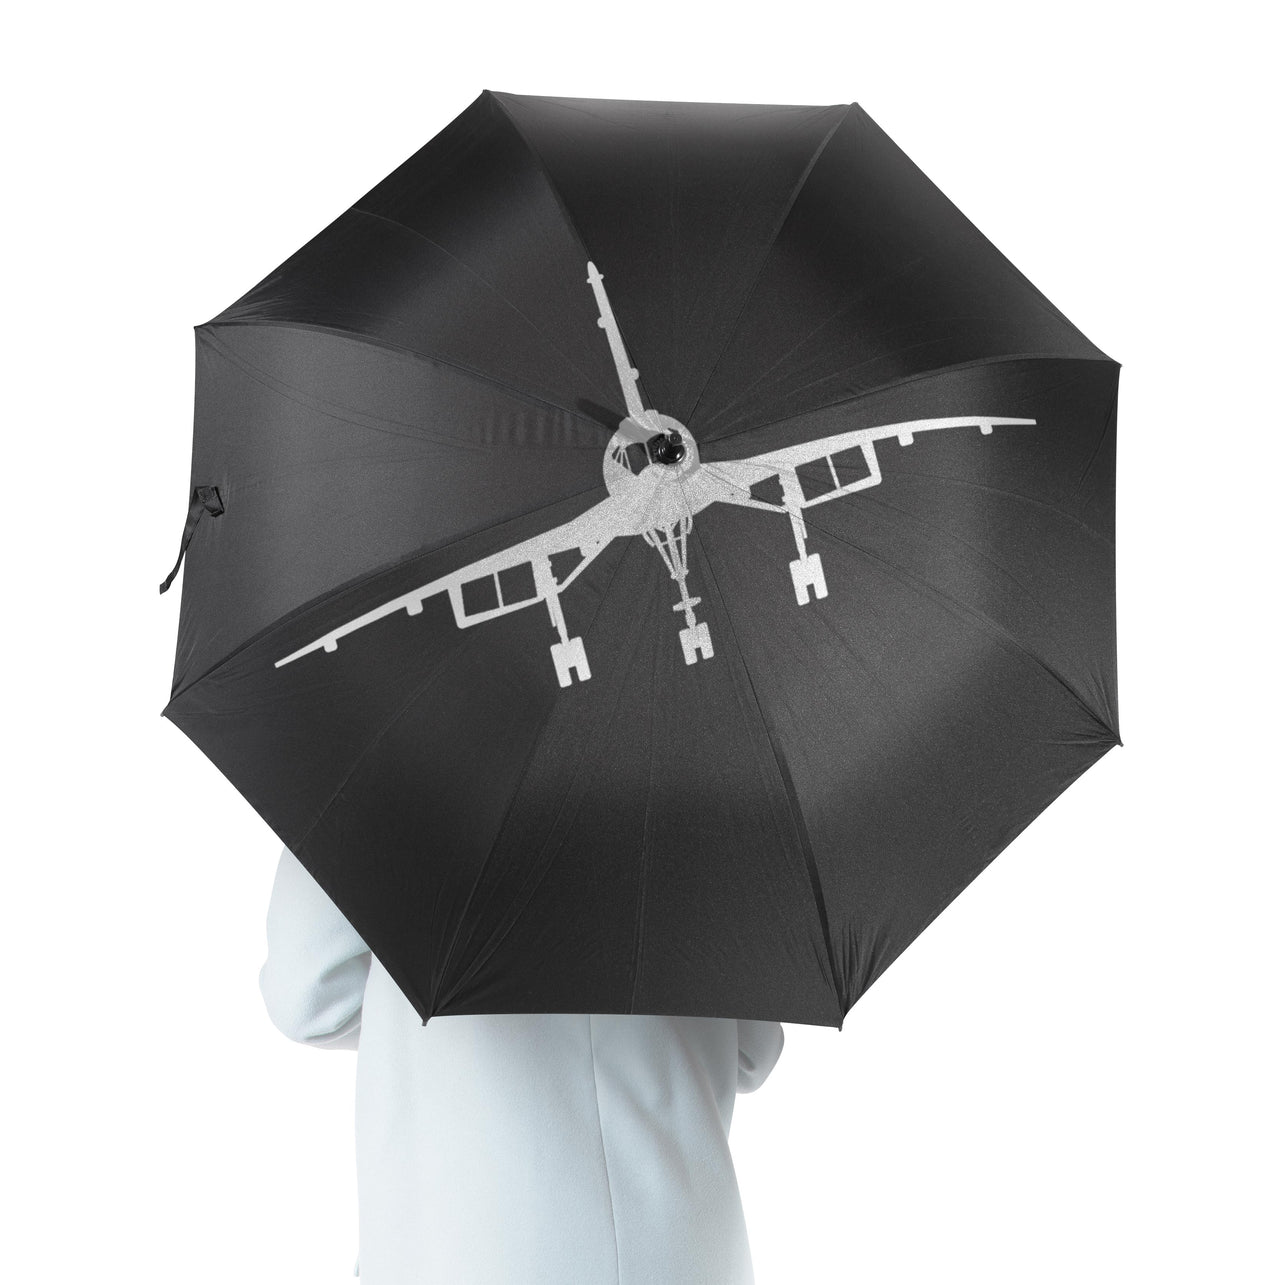 Concorde Silhouette Designed Umbrella